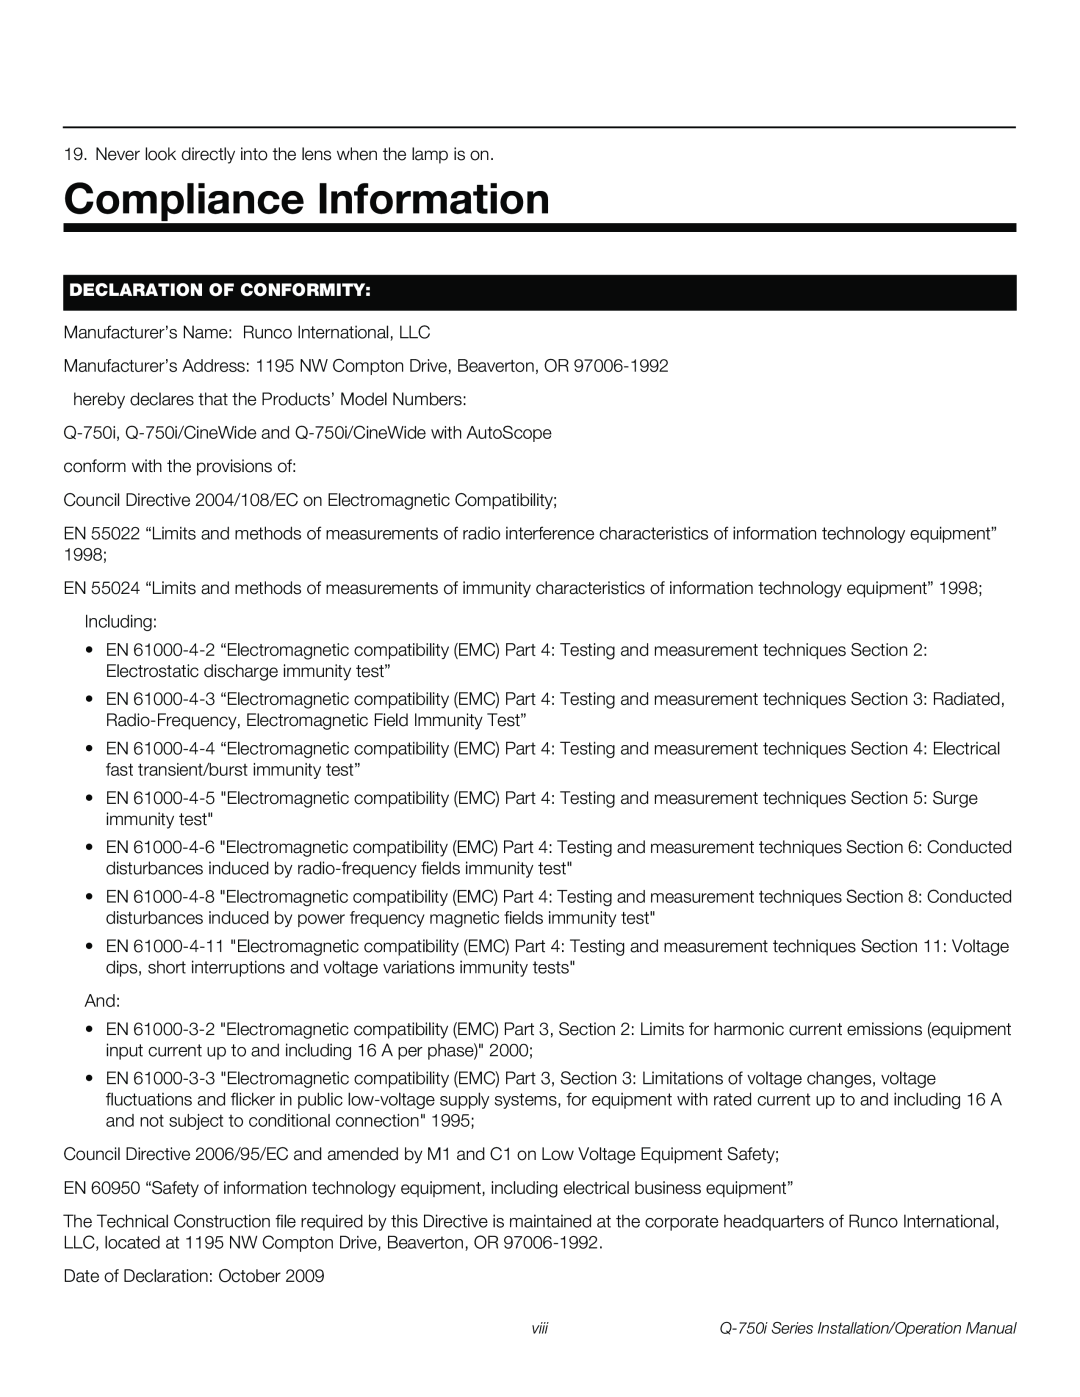 Runco Q-750I operation manual Compliance Information, Declaration Of Conformity 